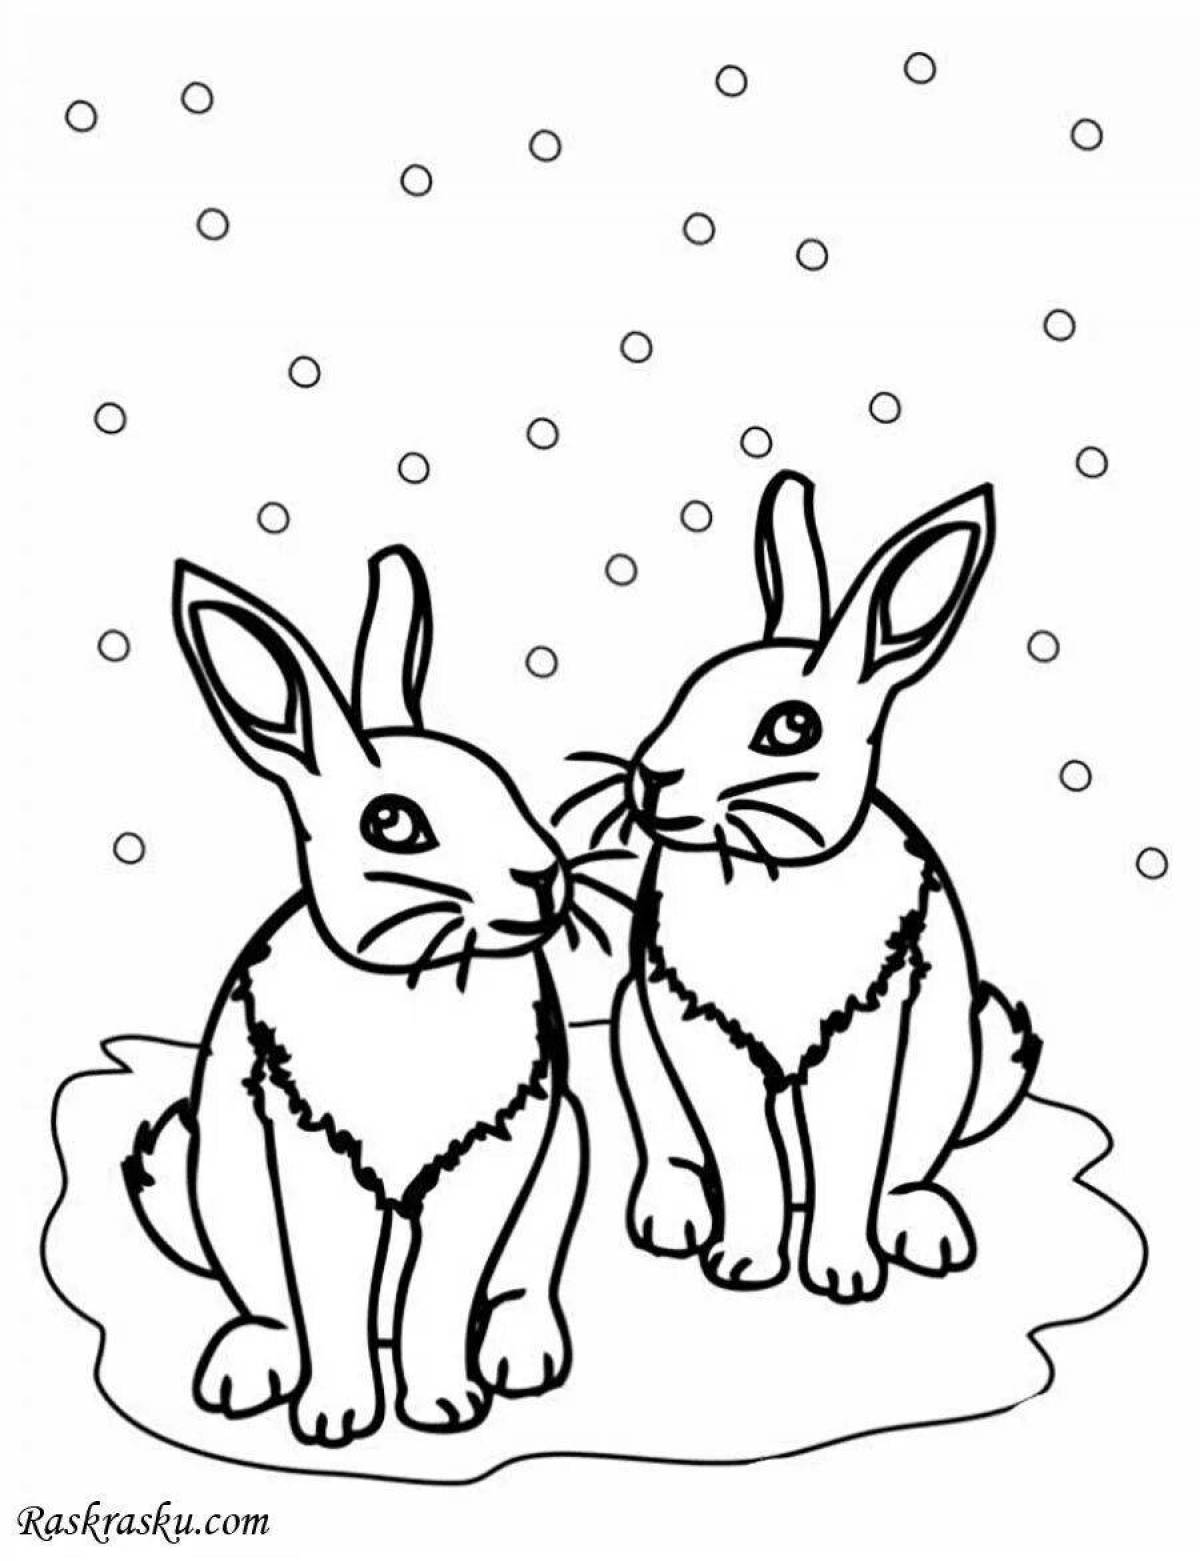 Snow hare in winter